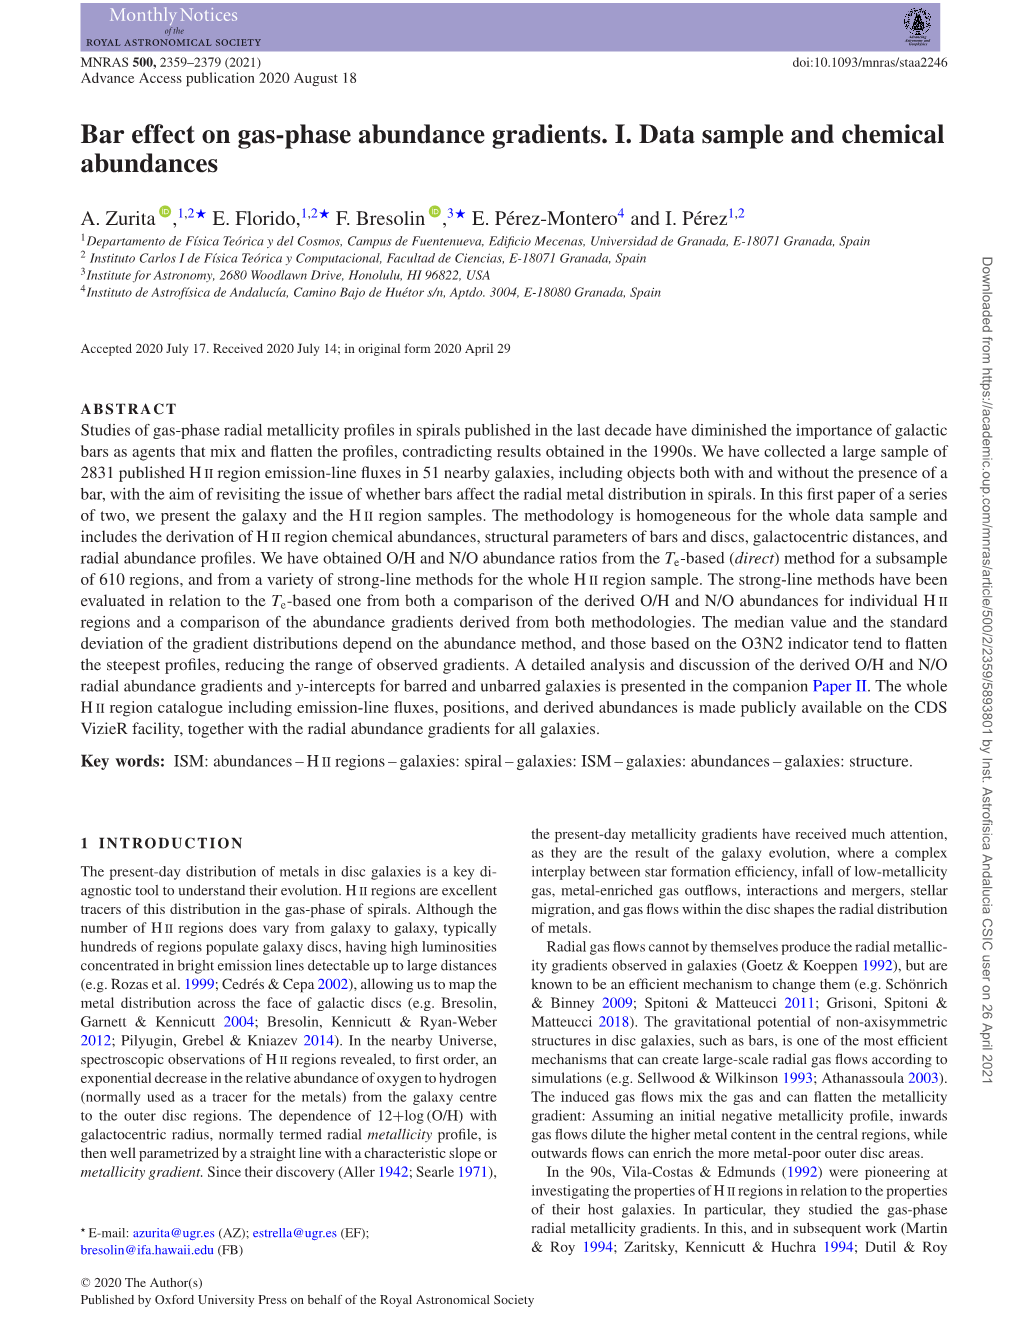 Bar Effect on Gas-Phase Abundance Gradients. I. Data Sample and Chemical Abundances